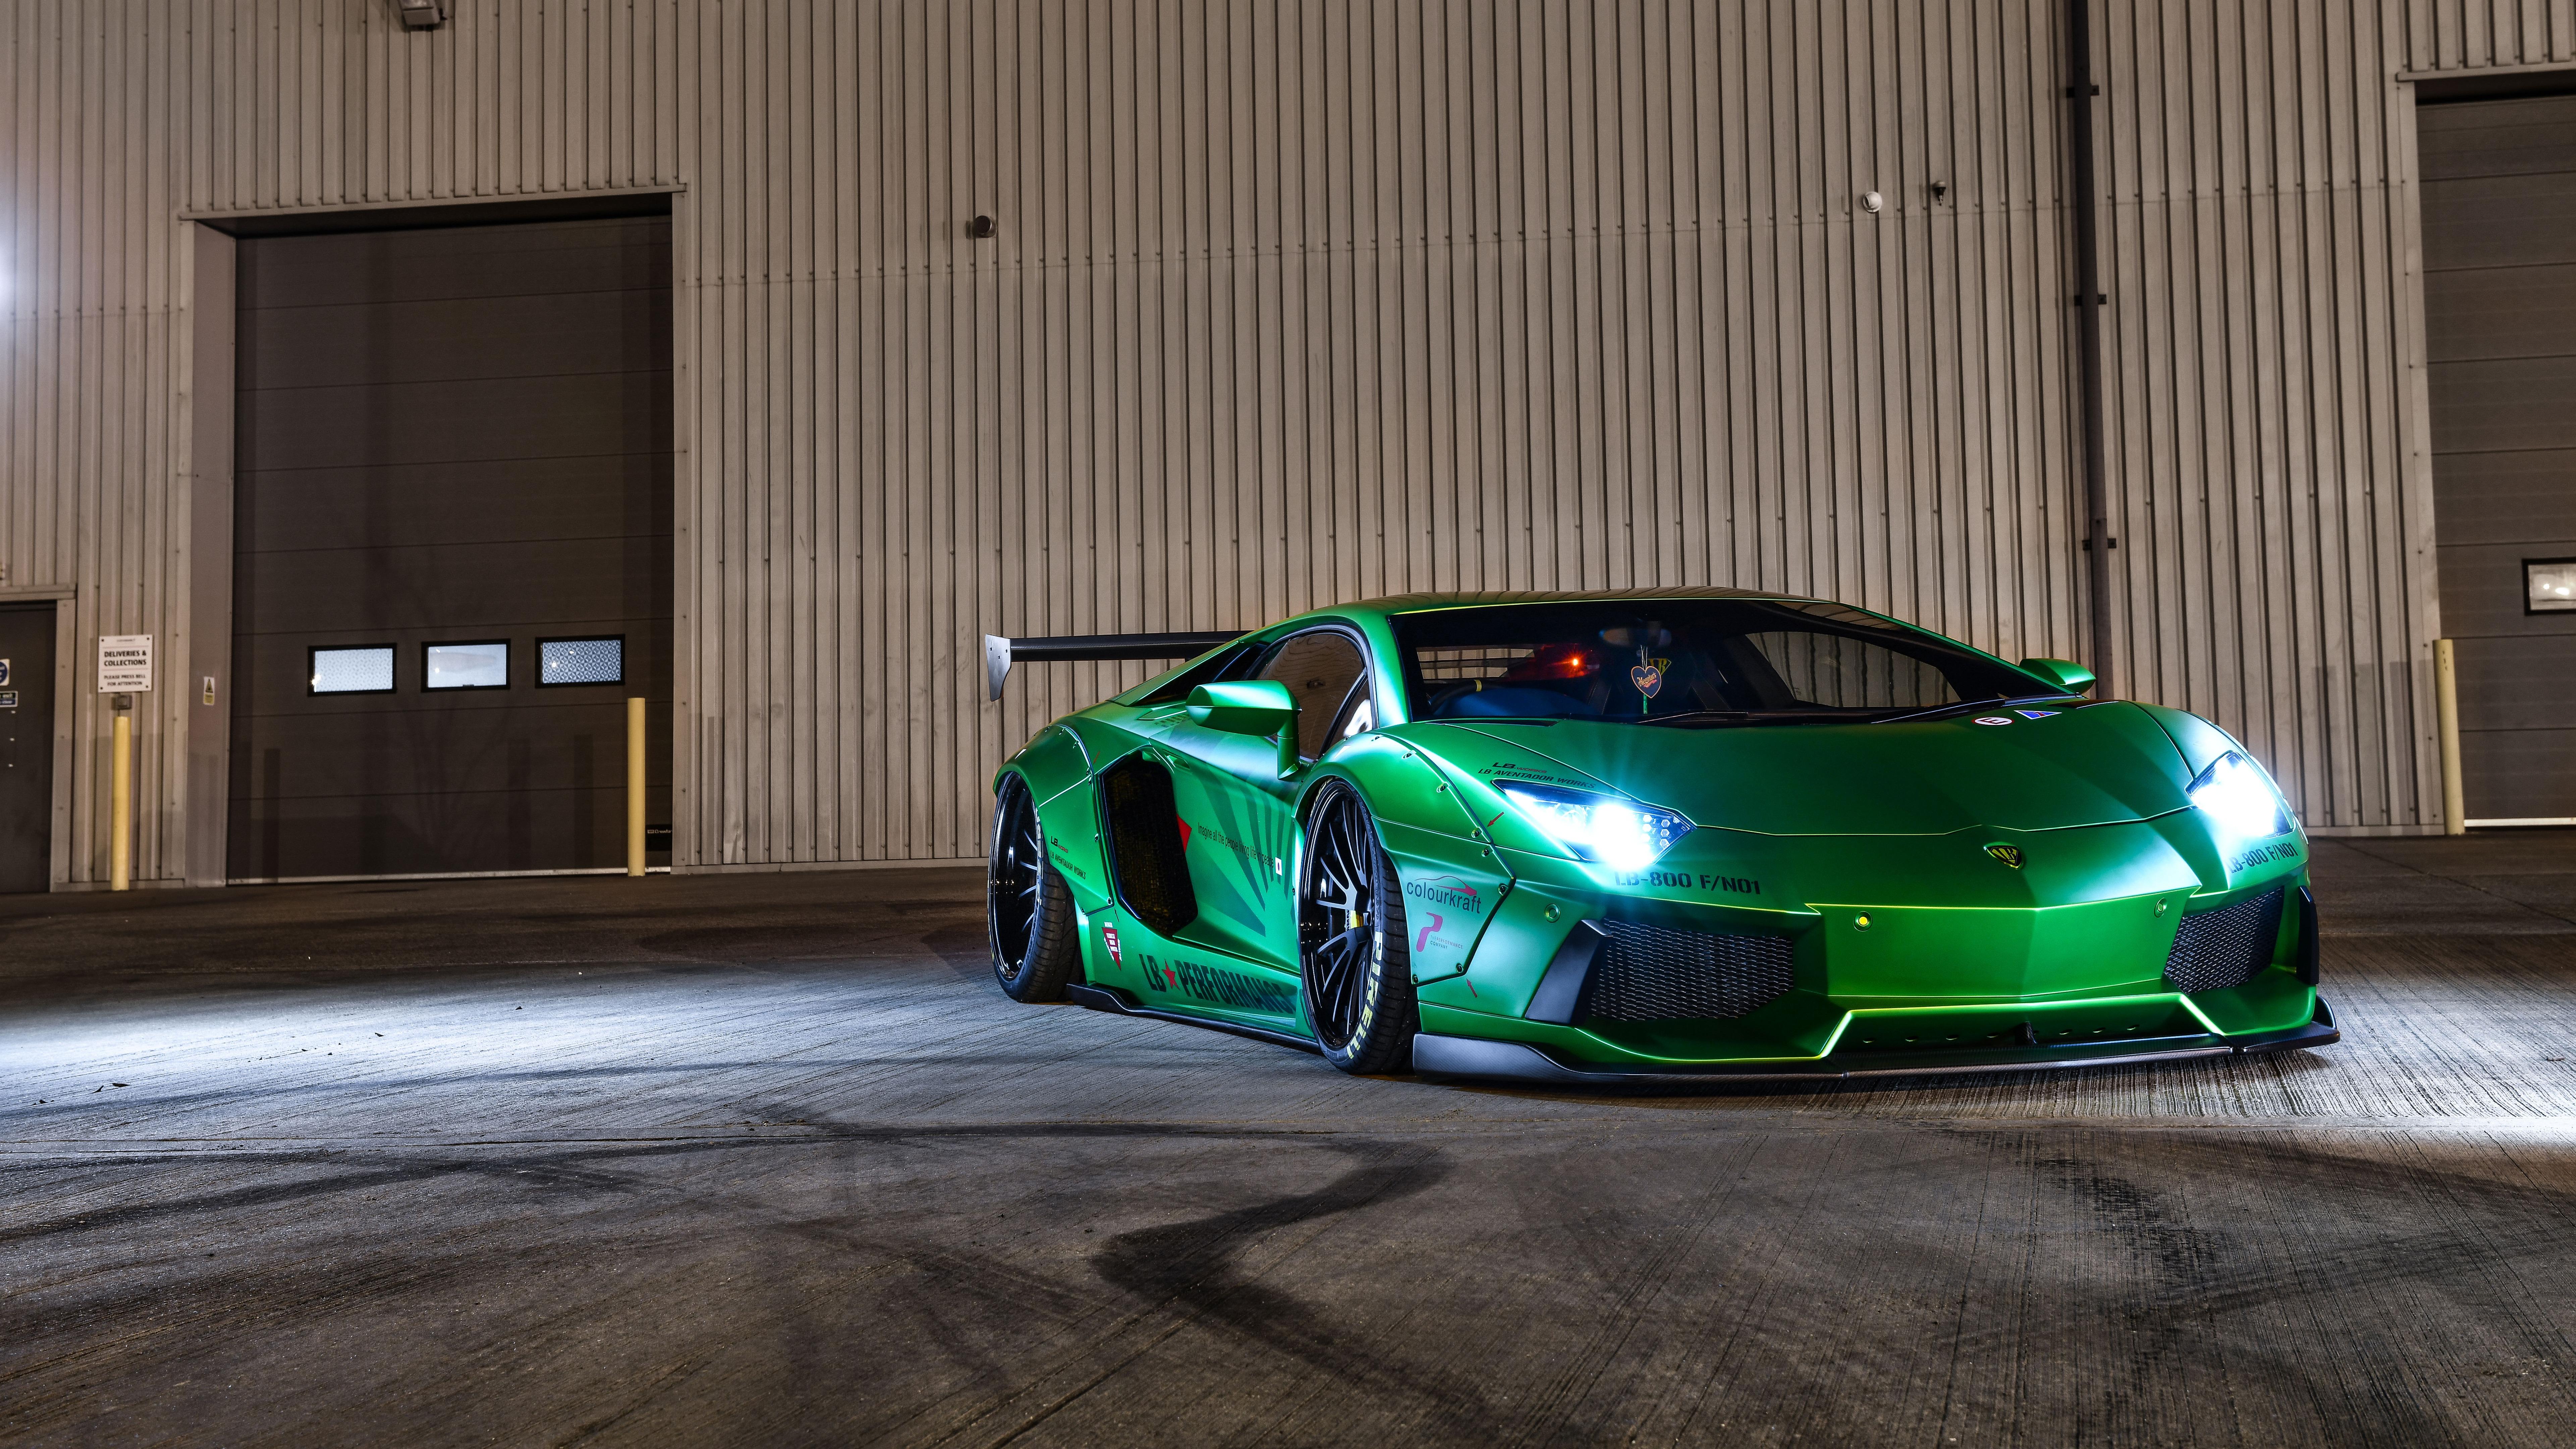 Green Lamborghini Aventador LP700-4 wallpaper - backiee